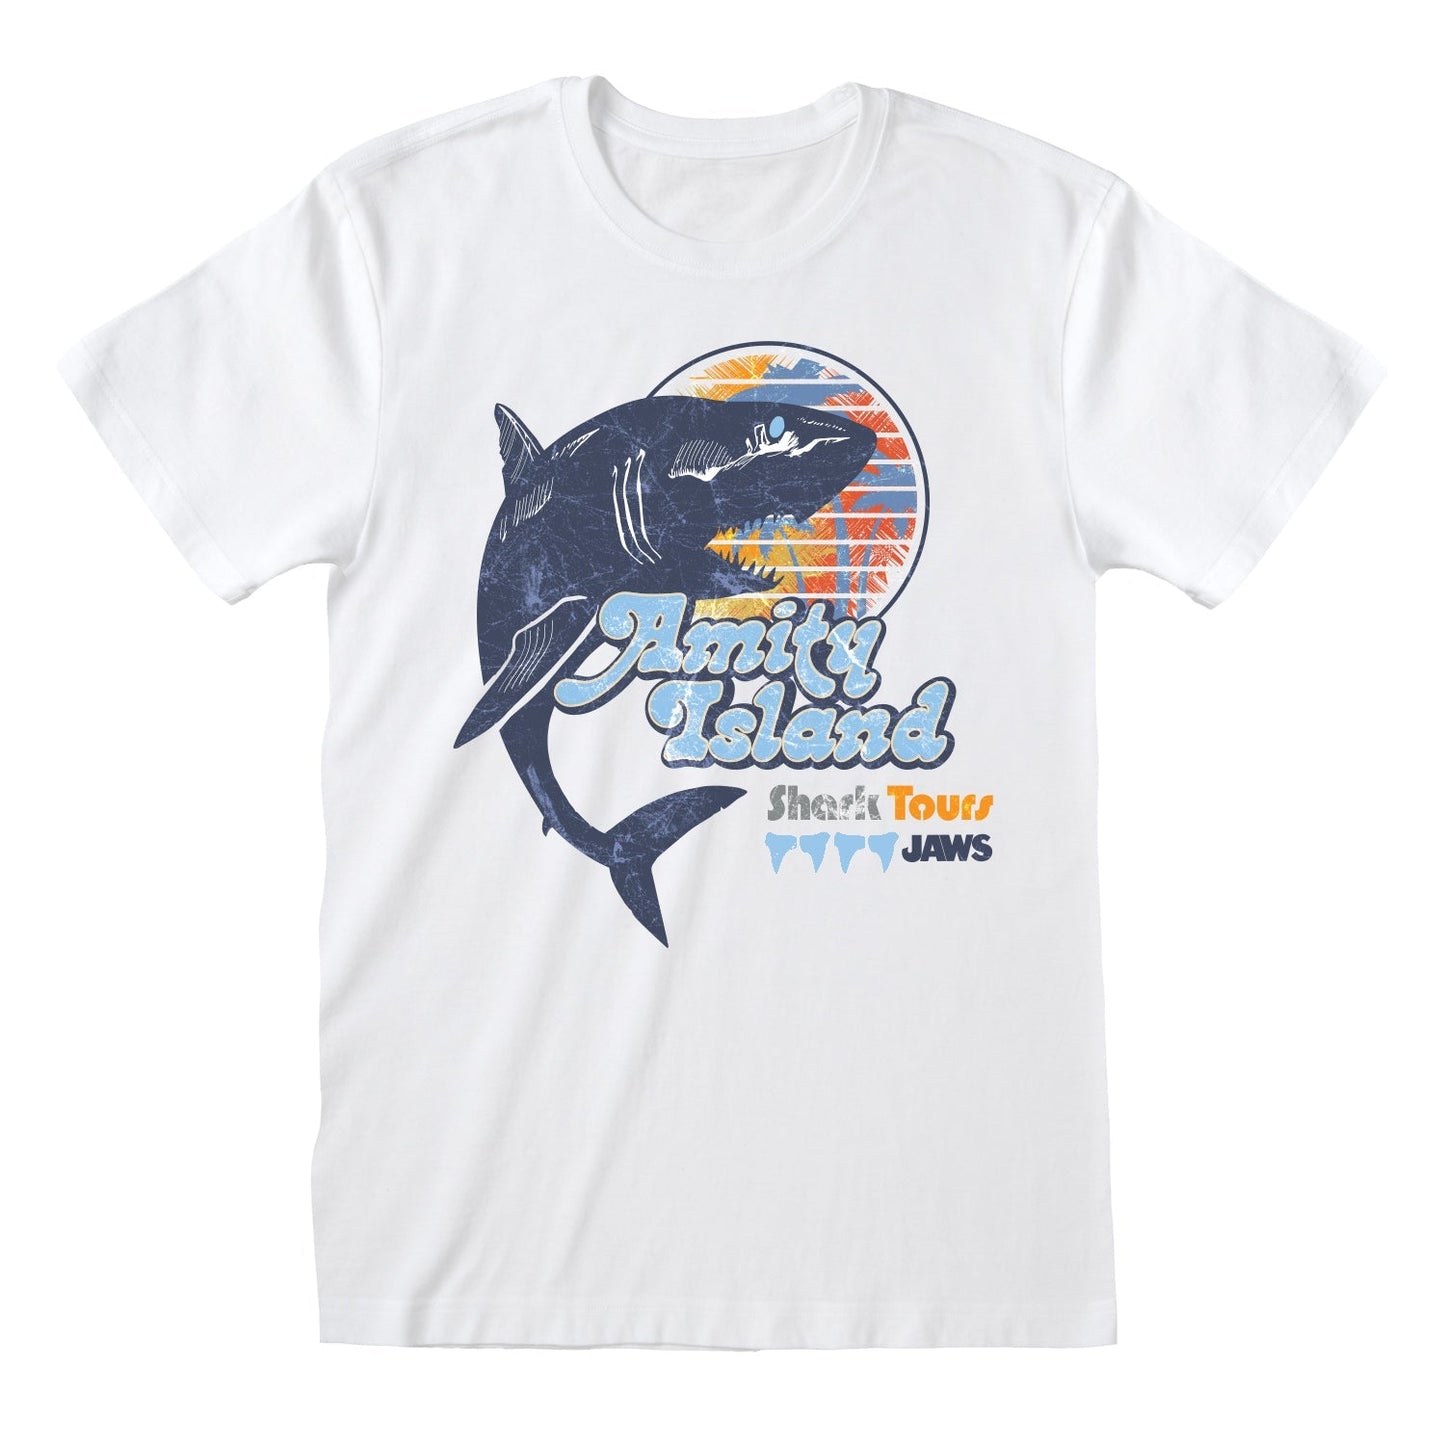 Jaws Amity Island Shark Tours T-shirt Women's